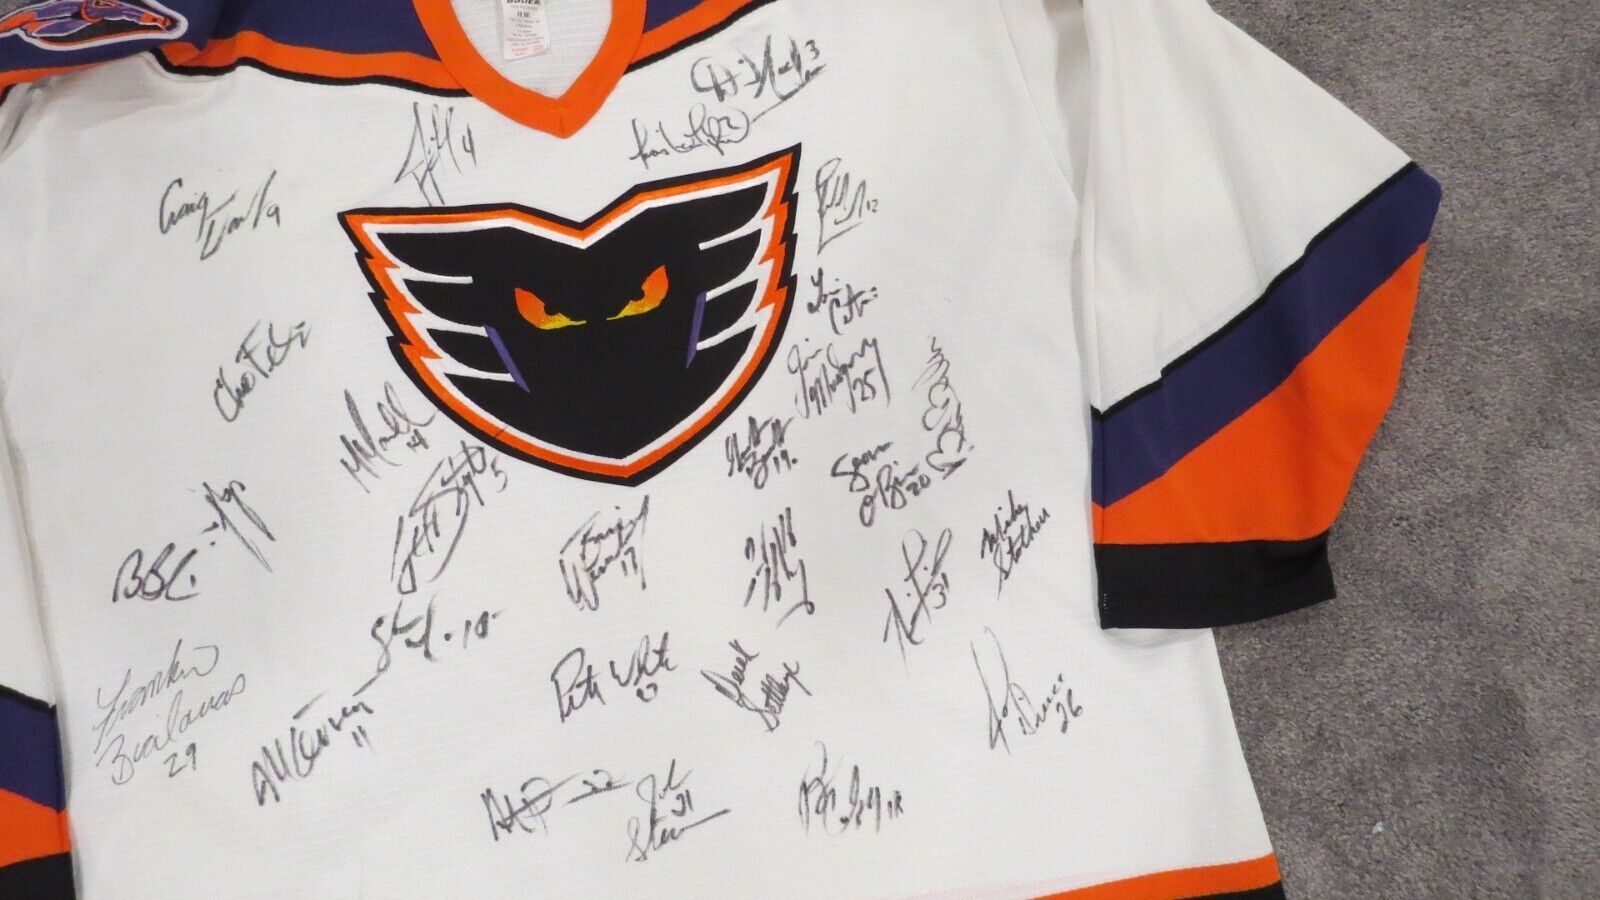 AHL Authentic - Signed Hockey Memorabilia, Autographed Jerseys